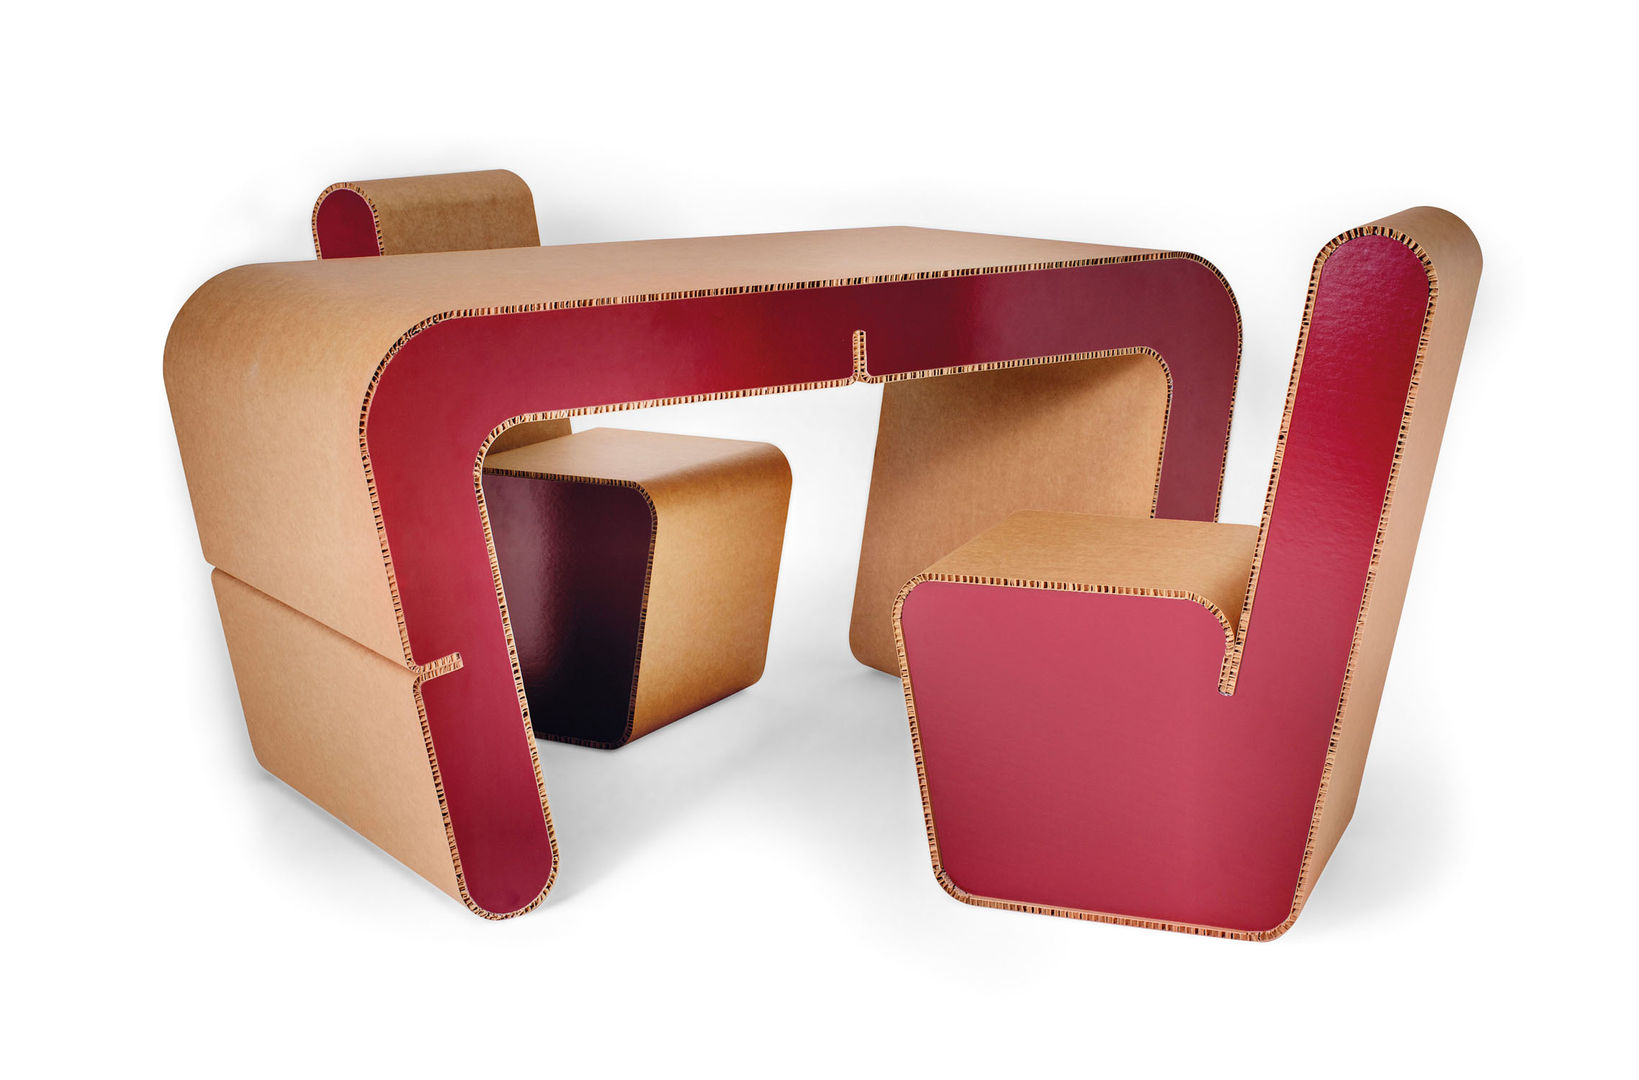 Snake Collection, Origami Furniture Origami Furniture Minimalist study/office Desks